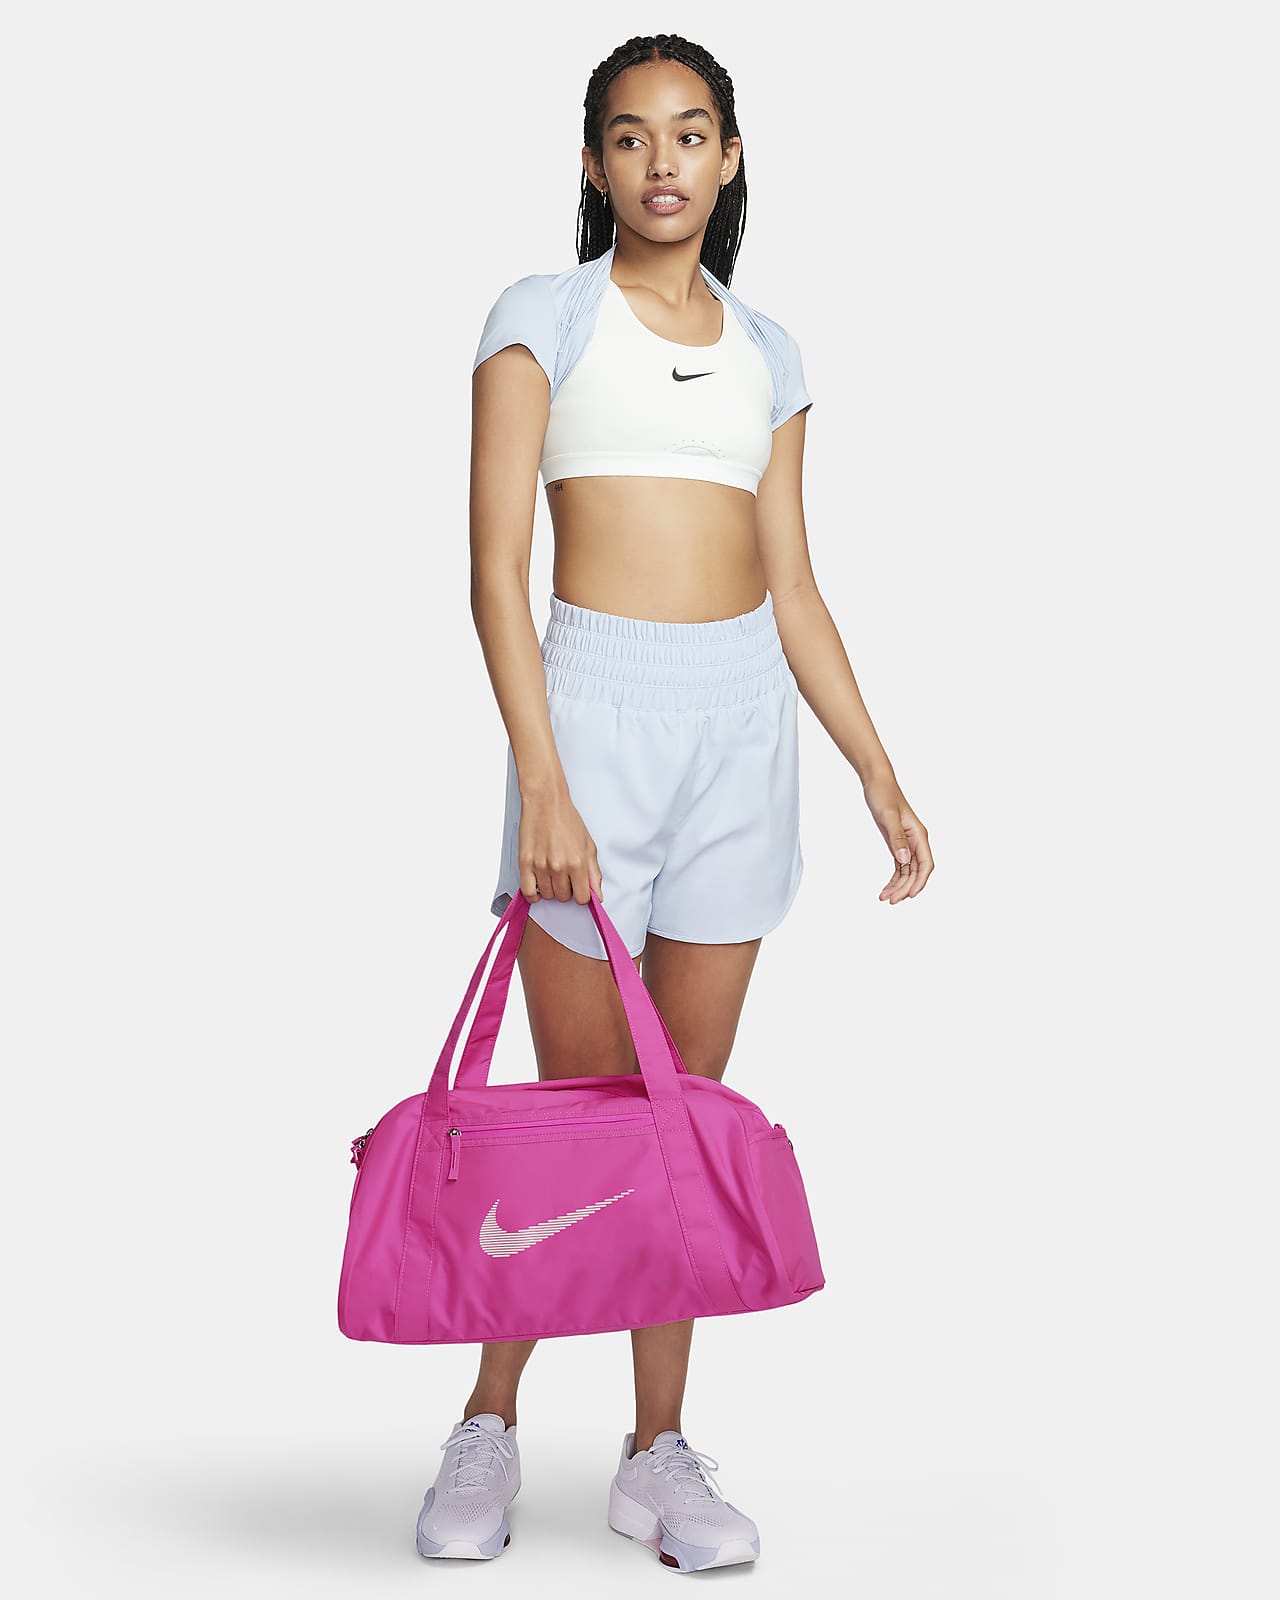 DSC01314, NIKE YOGA BAG Description: Nike Yoga Bag (with 2 …